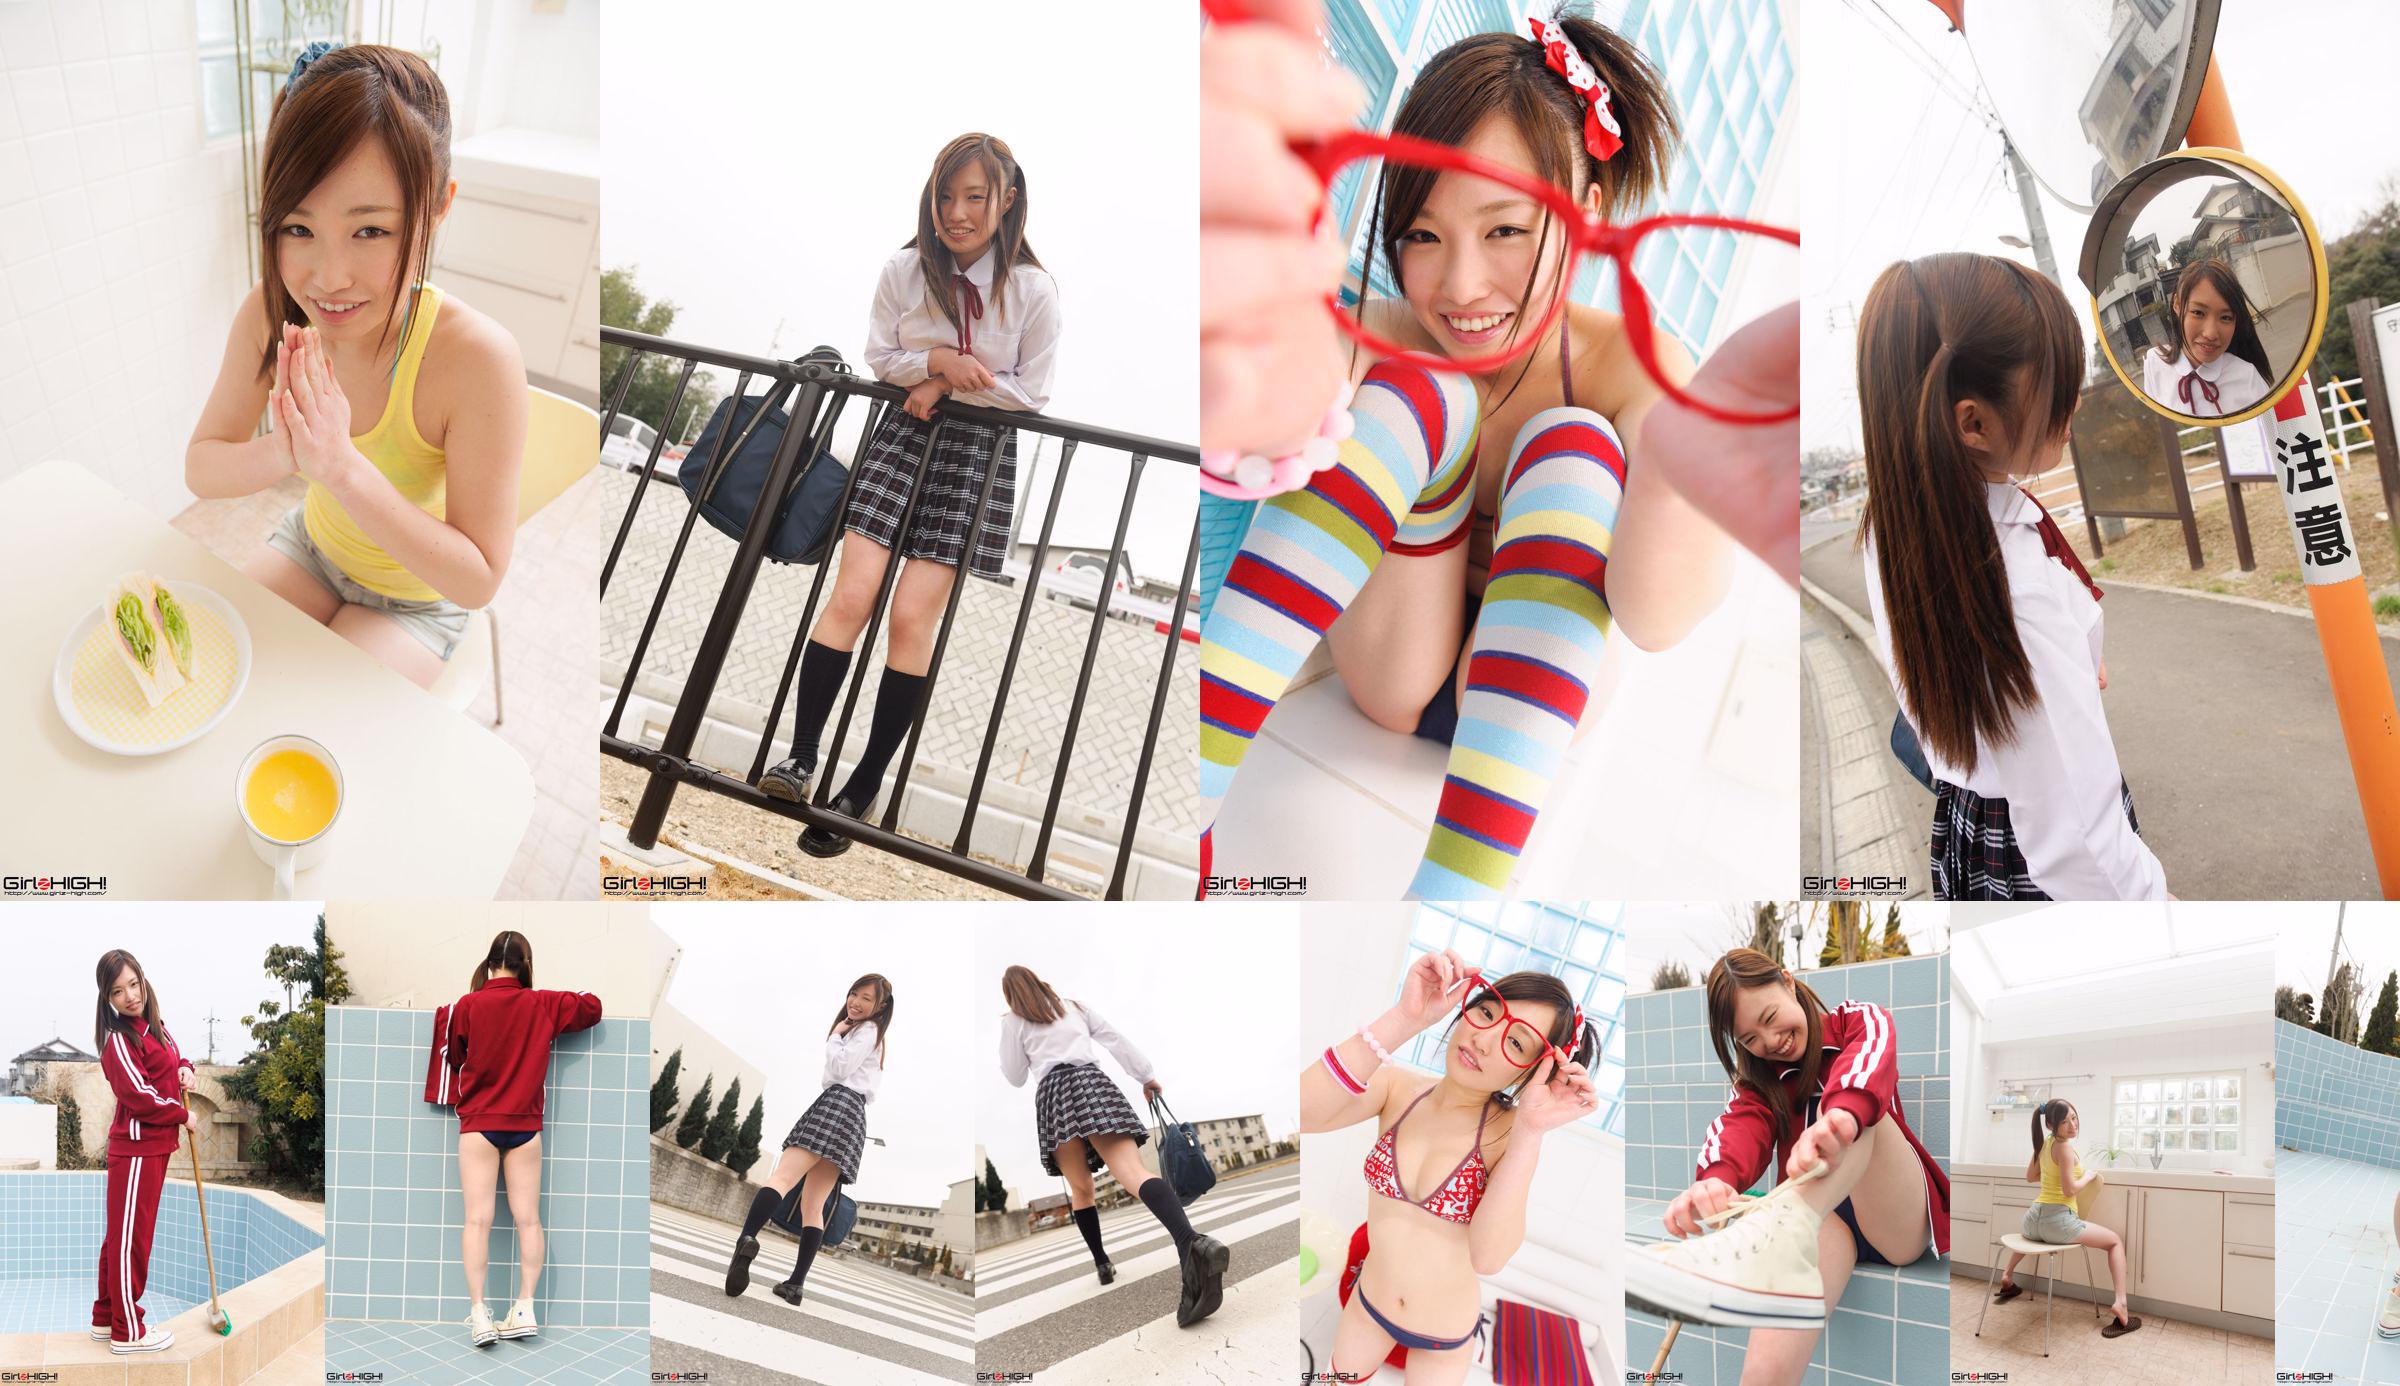 [Girlz-High] Yuno Natsuki Yuno Natsuki / Yuno Natsuki Gravure Gallery-g023 Photoset 03 No.da9d42 Page 4